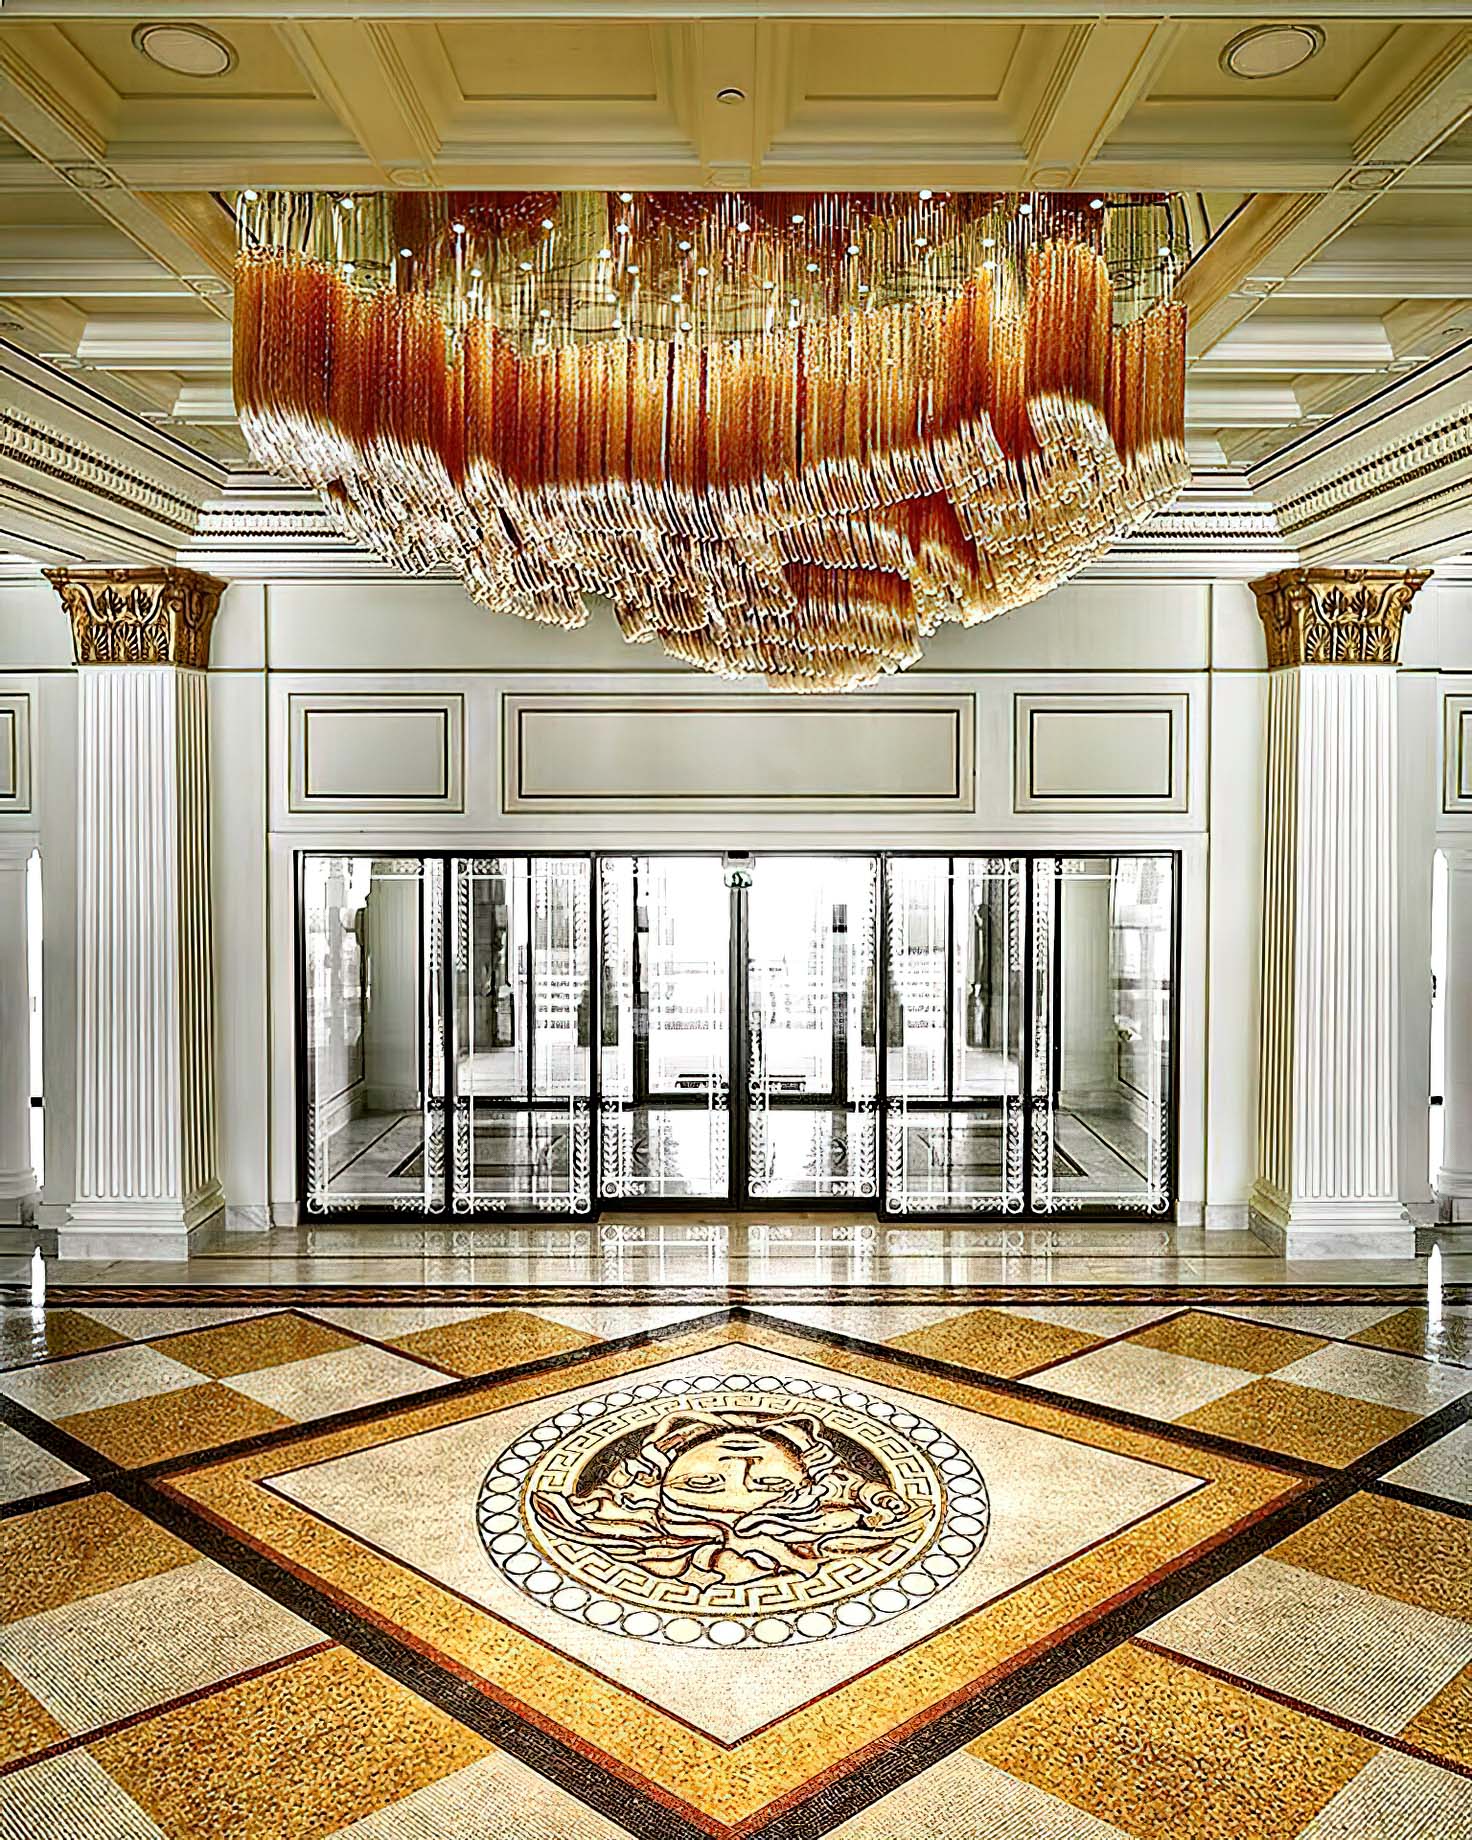 Palazzo Versace Dubai Hotel – Jaddaf Waterfront, Dubai, UAE – Neoclassical Architecture and Signature Versace Decor